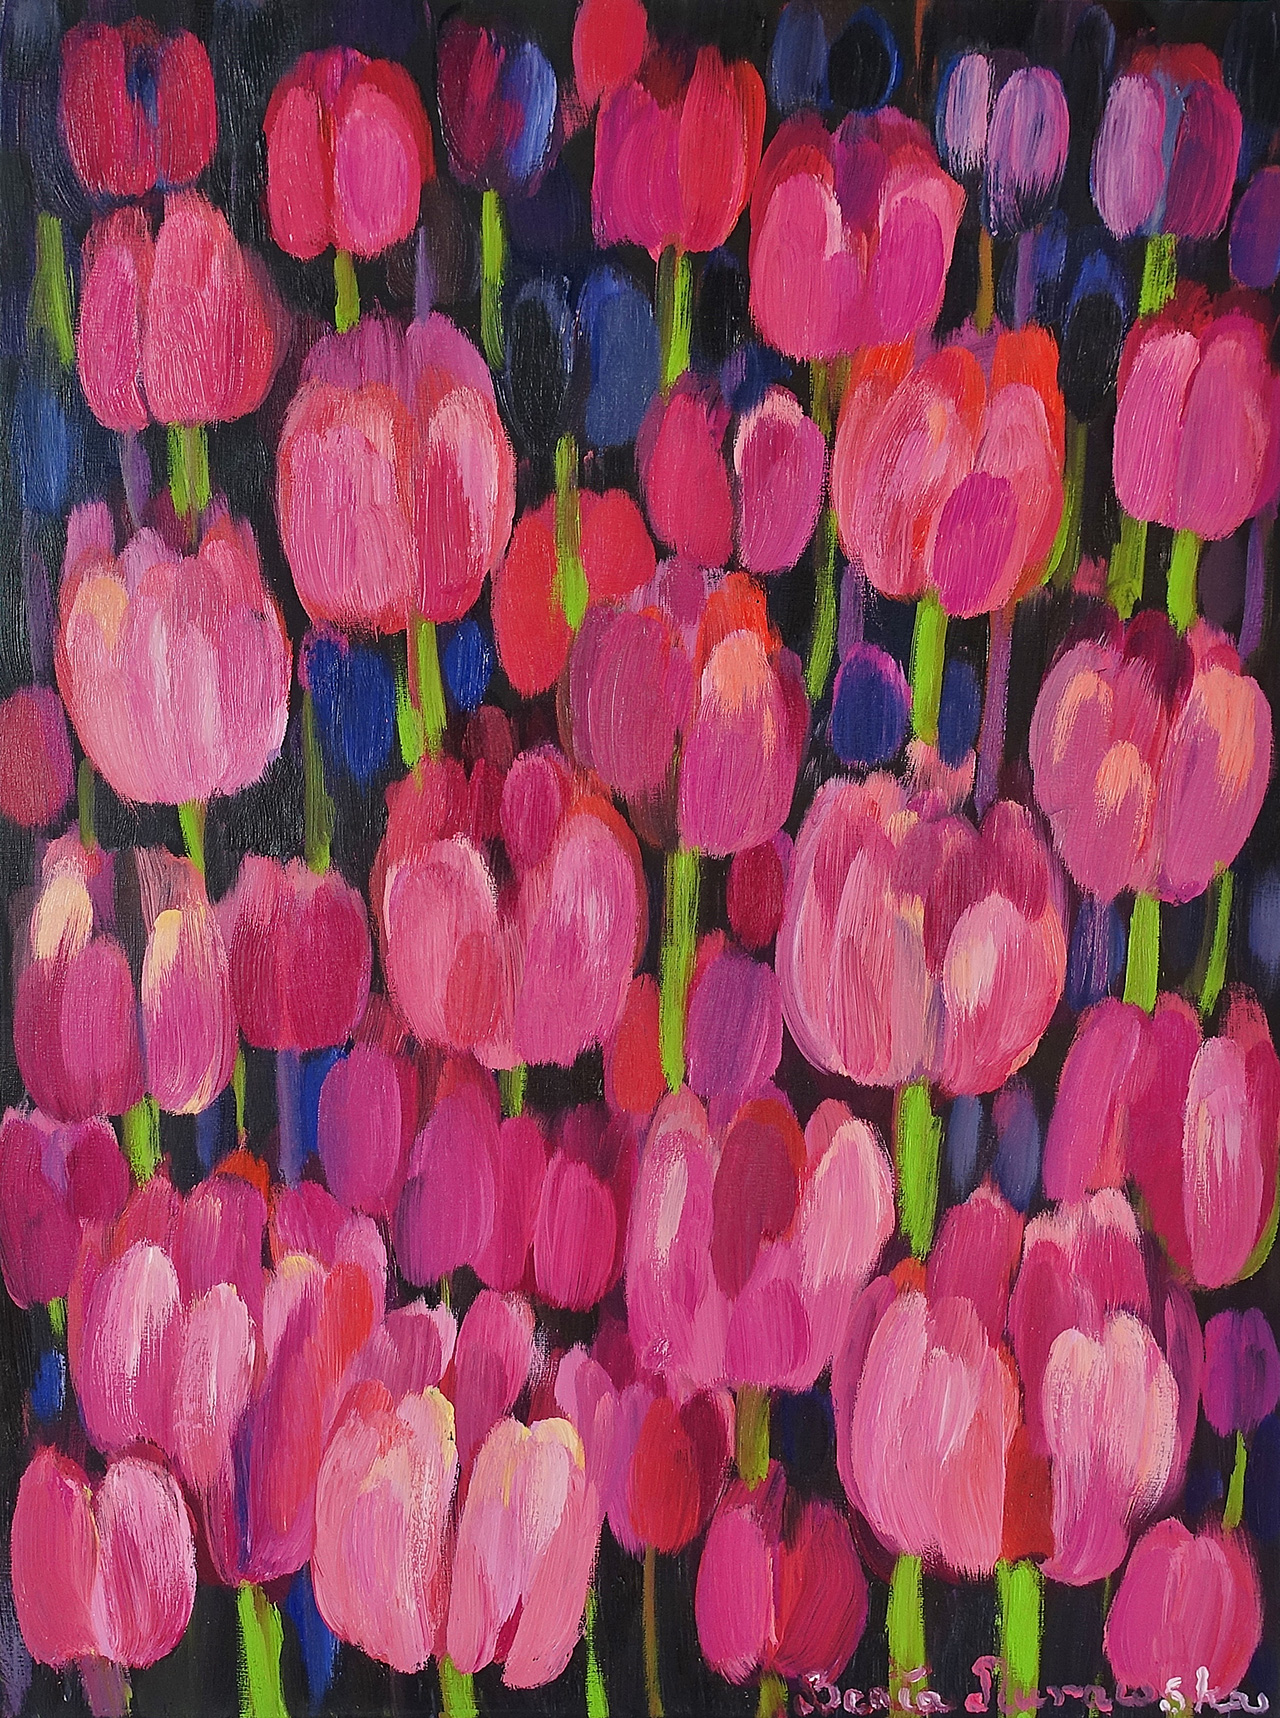 Beata Murawska - Strawberry tulip field (Oil on Canvas | Size: 66 x 86 cm | Price: 6500 PLN)